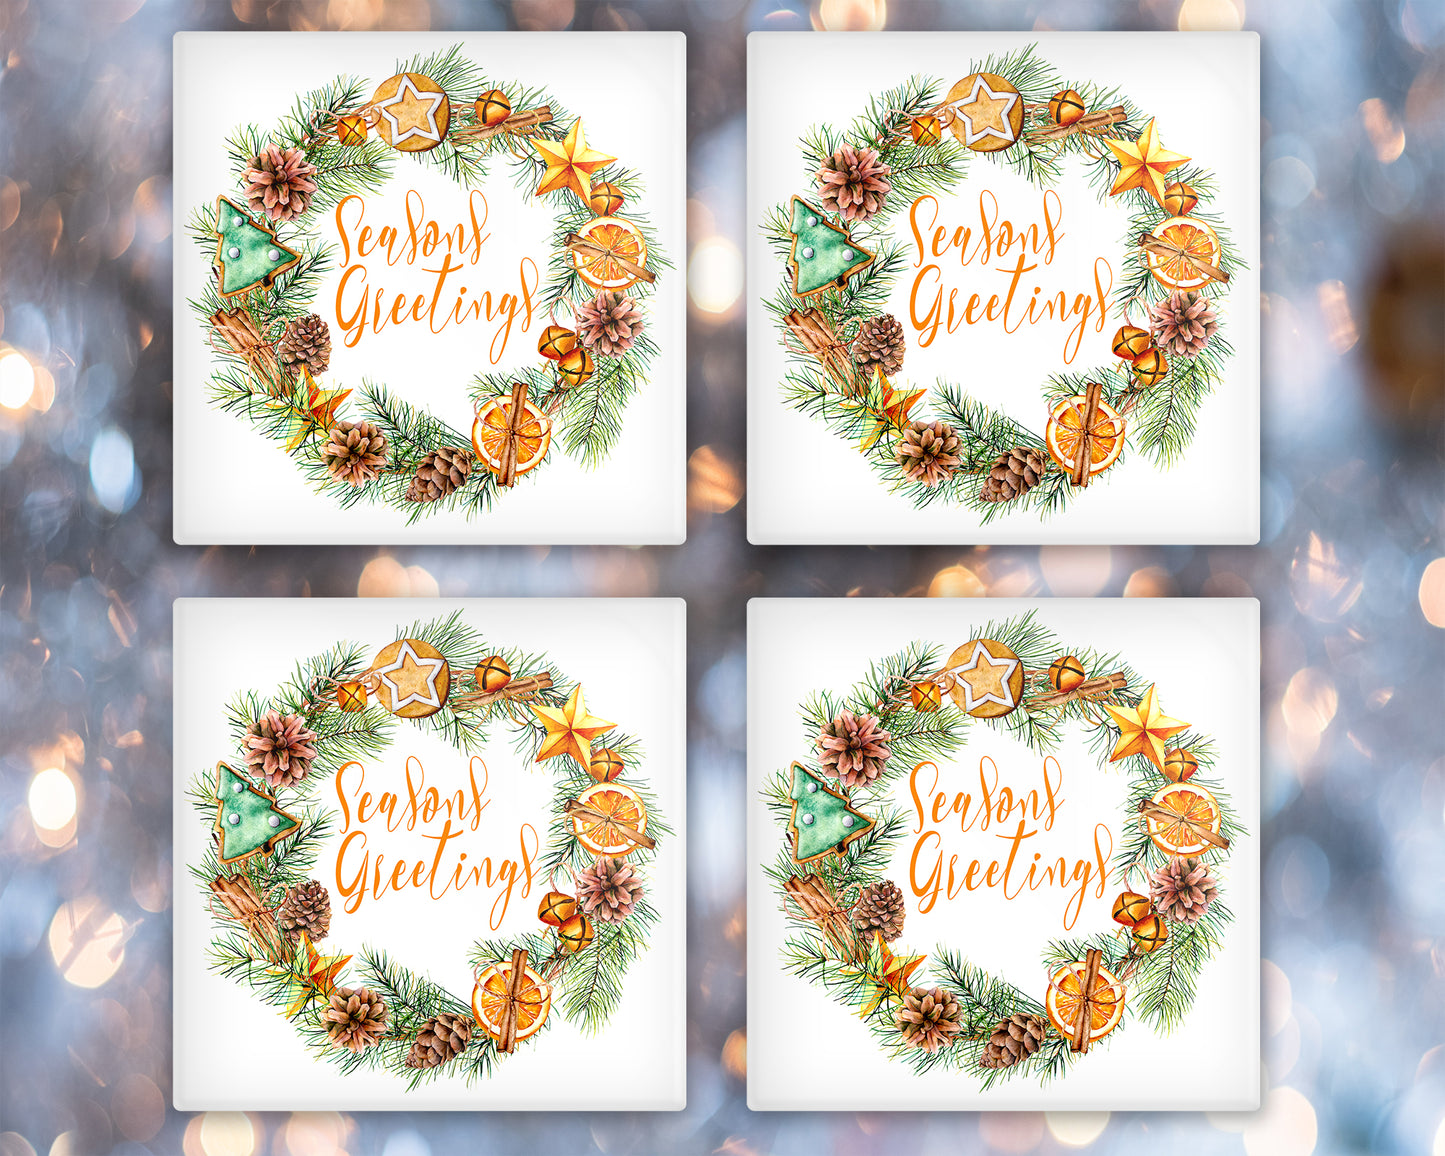 Seasons Greetings Glass Coasters, Christmas Themed Coasters, Glass Coasters,Drinks Holder, Christmas Table Coasters, Merry Christmas